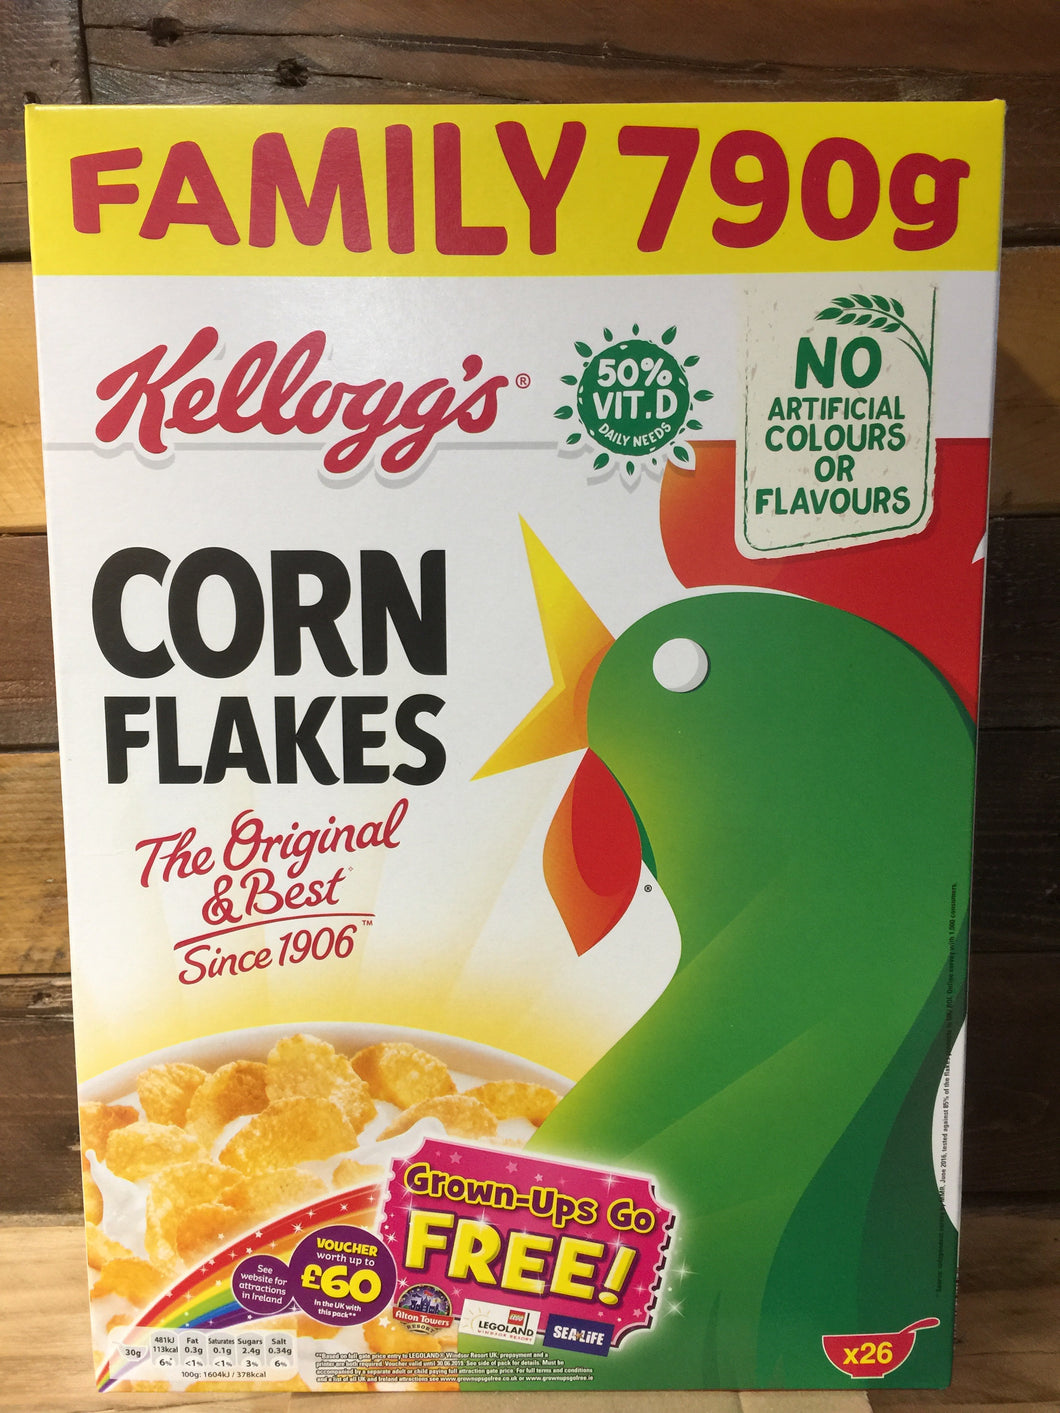 Kellogg's Corn Flakes Family Pack 790g